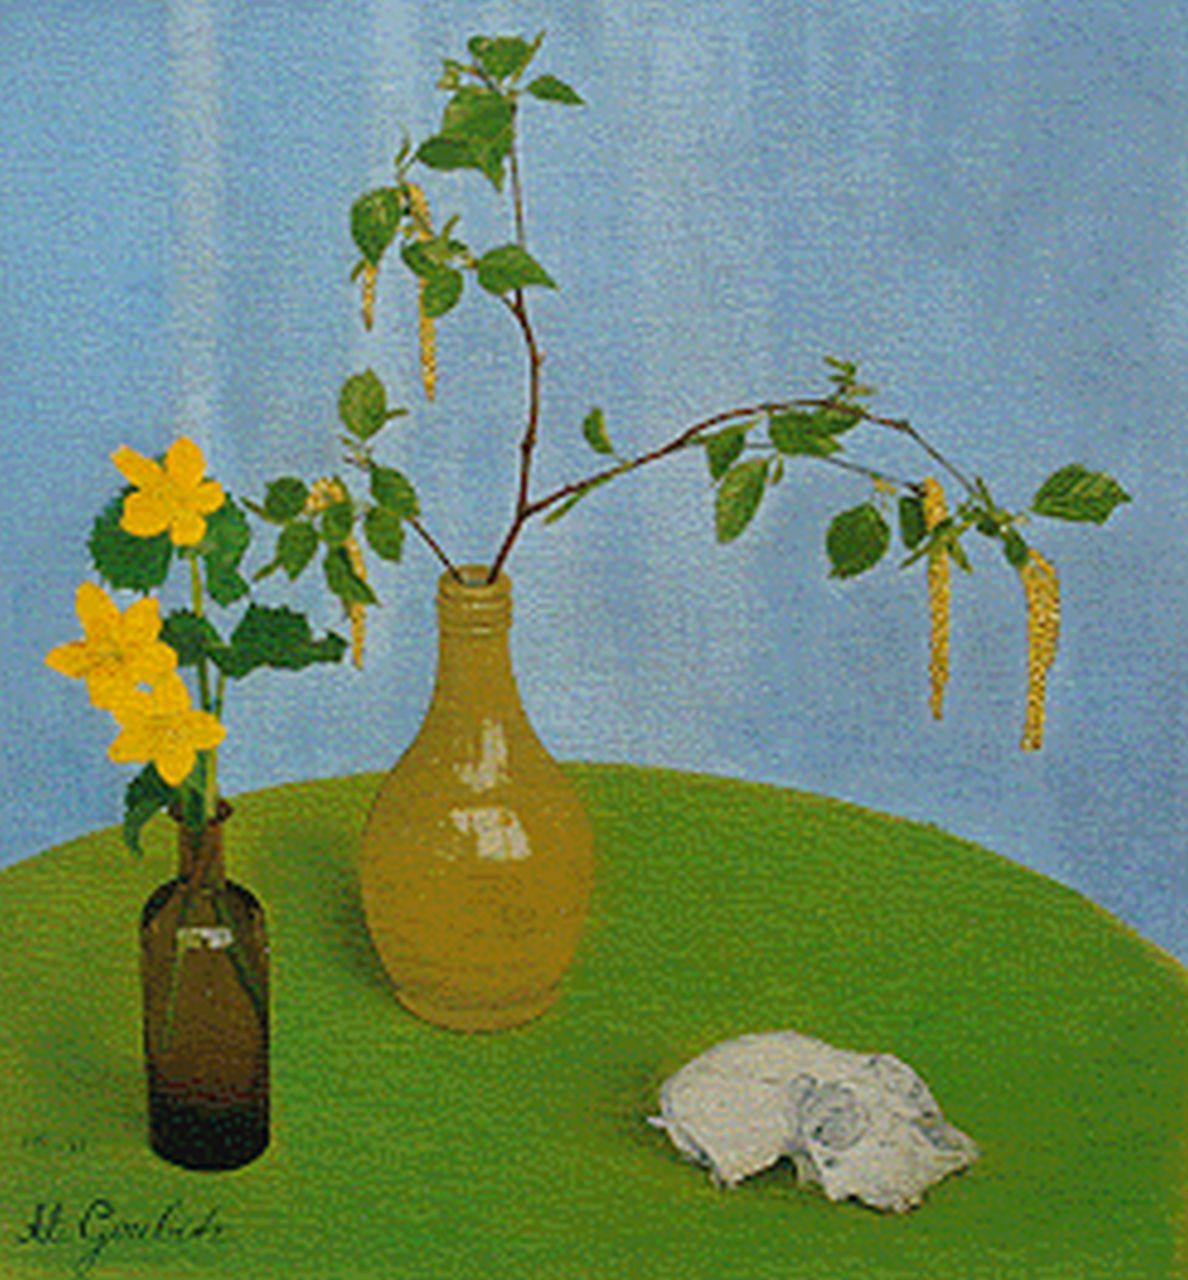 Goubitz A.  | 'Ali' Alida Goubitz, A Flower Still Life, Öl auf Leinwand 25,3 x 23,9 cm, signed l.l. und executed on 31-8-31